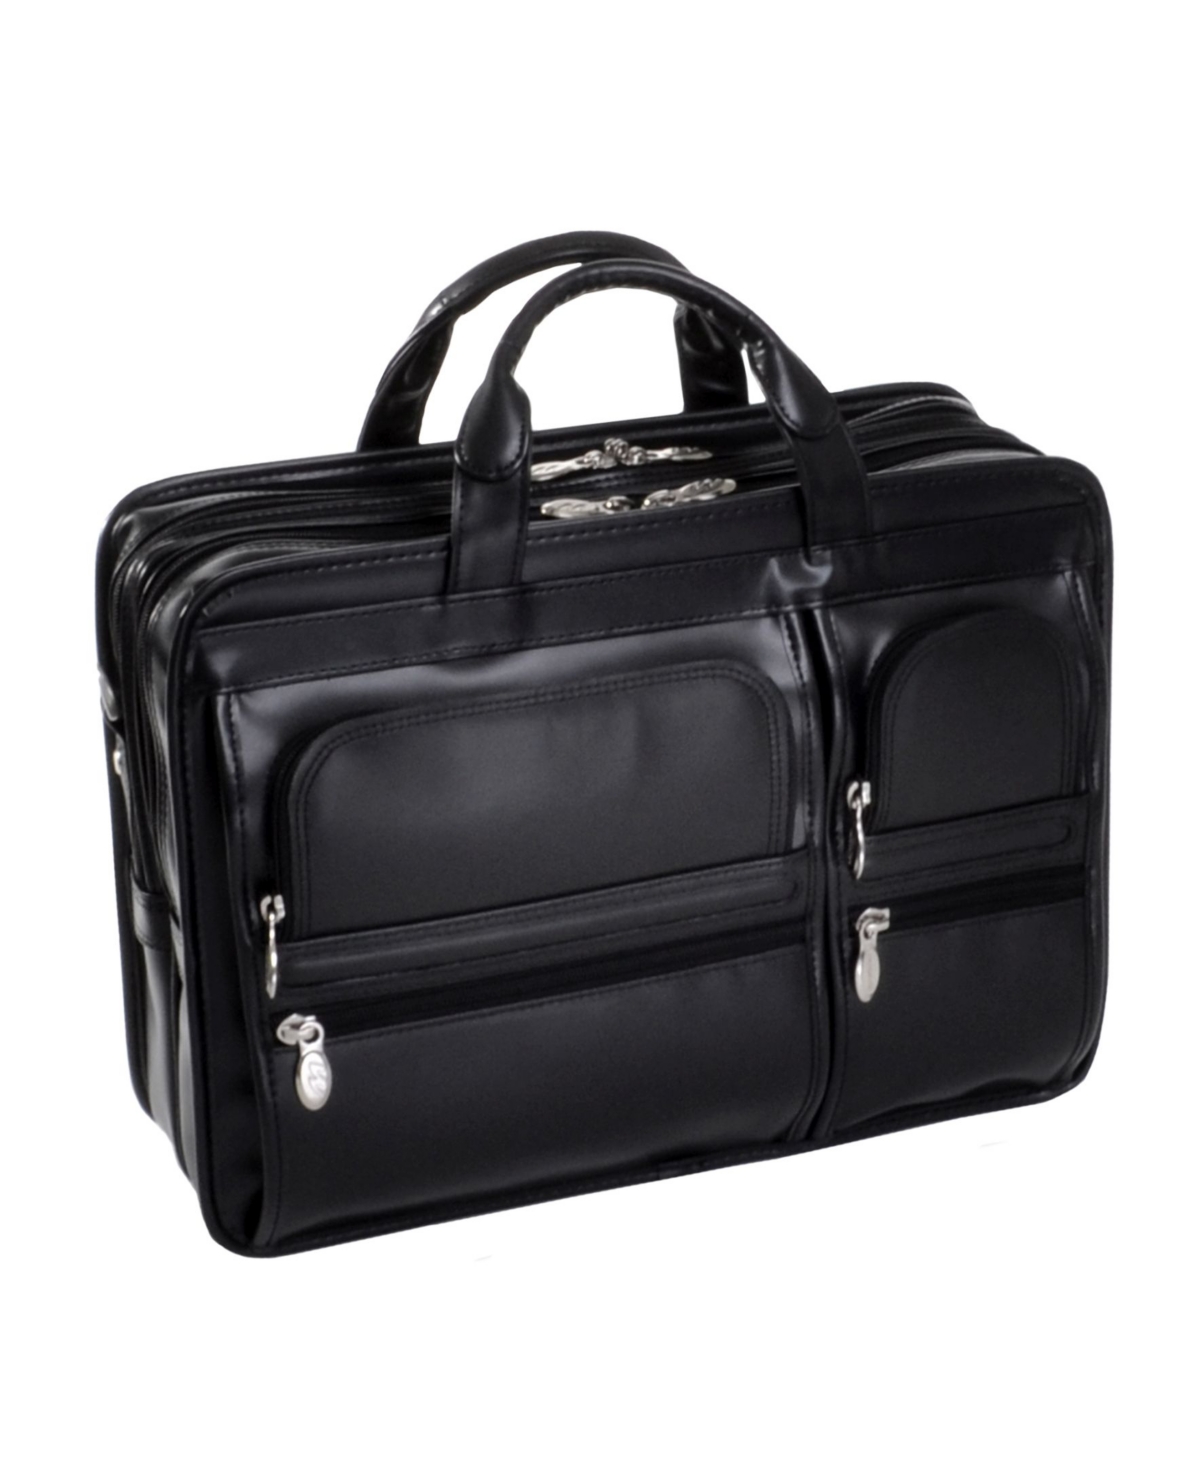 Hubbard Double Compartment Laptop Briefcase - Black